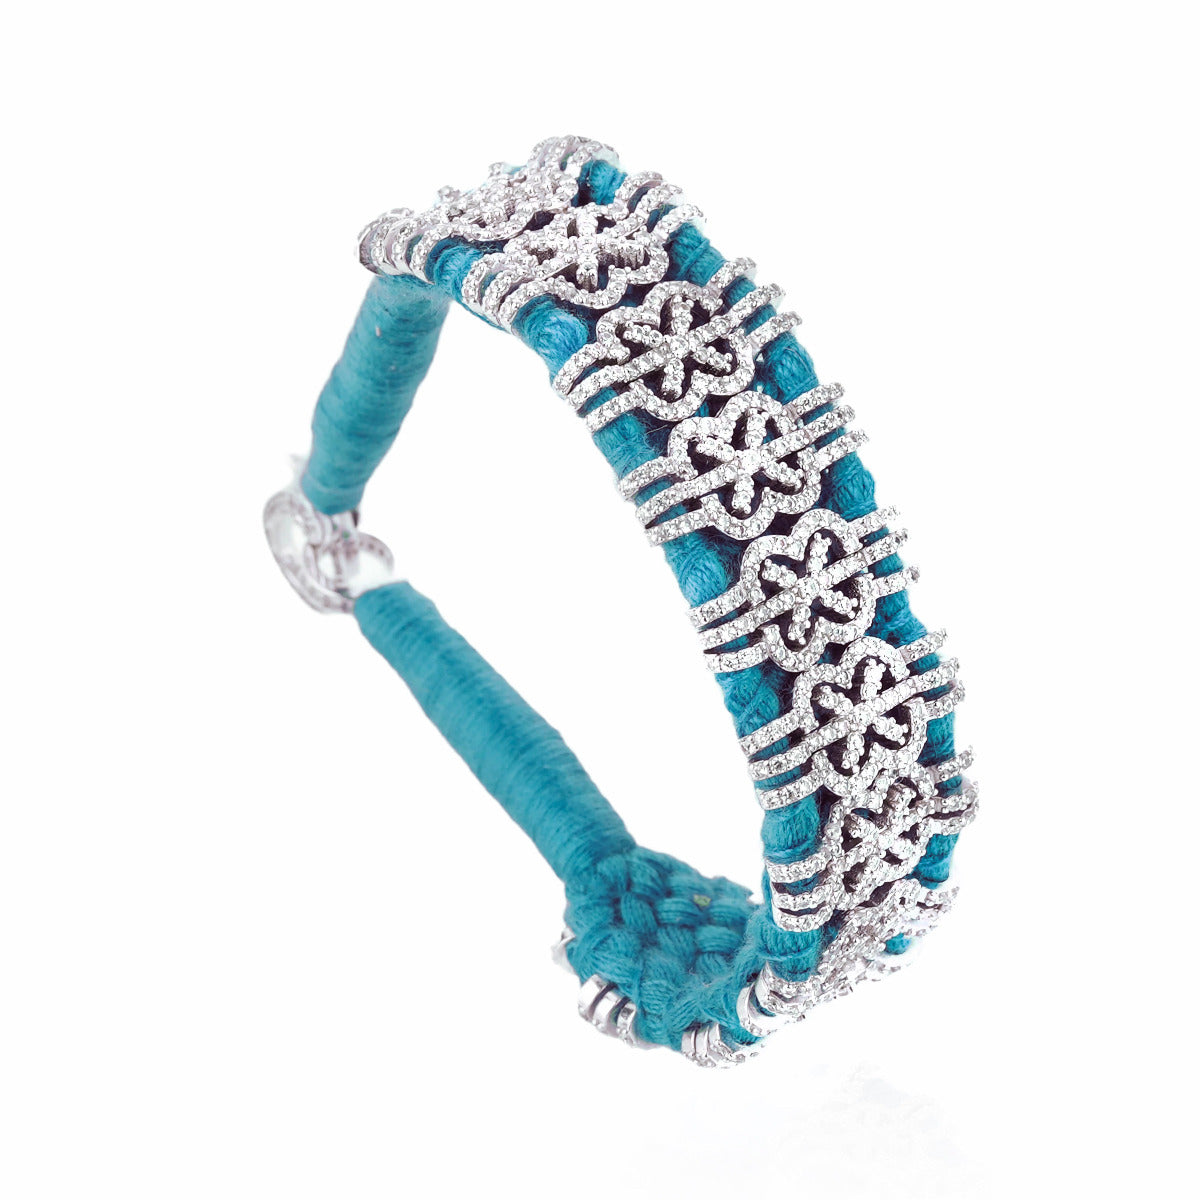 Bracelet Salvador turquoise